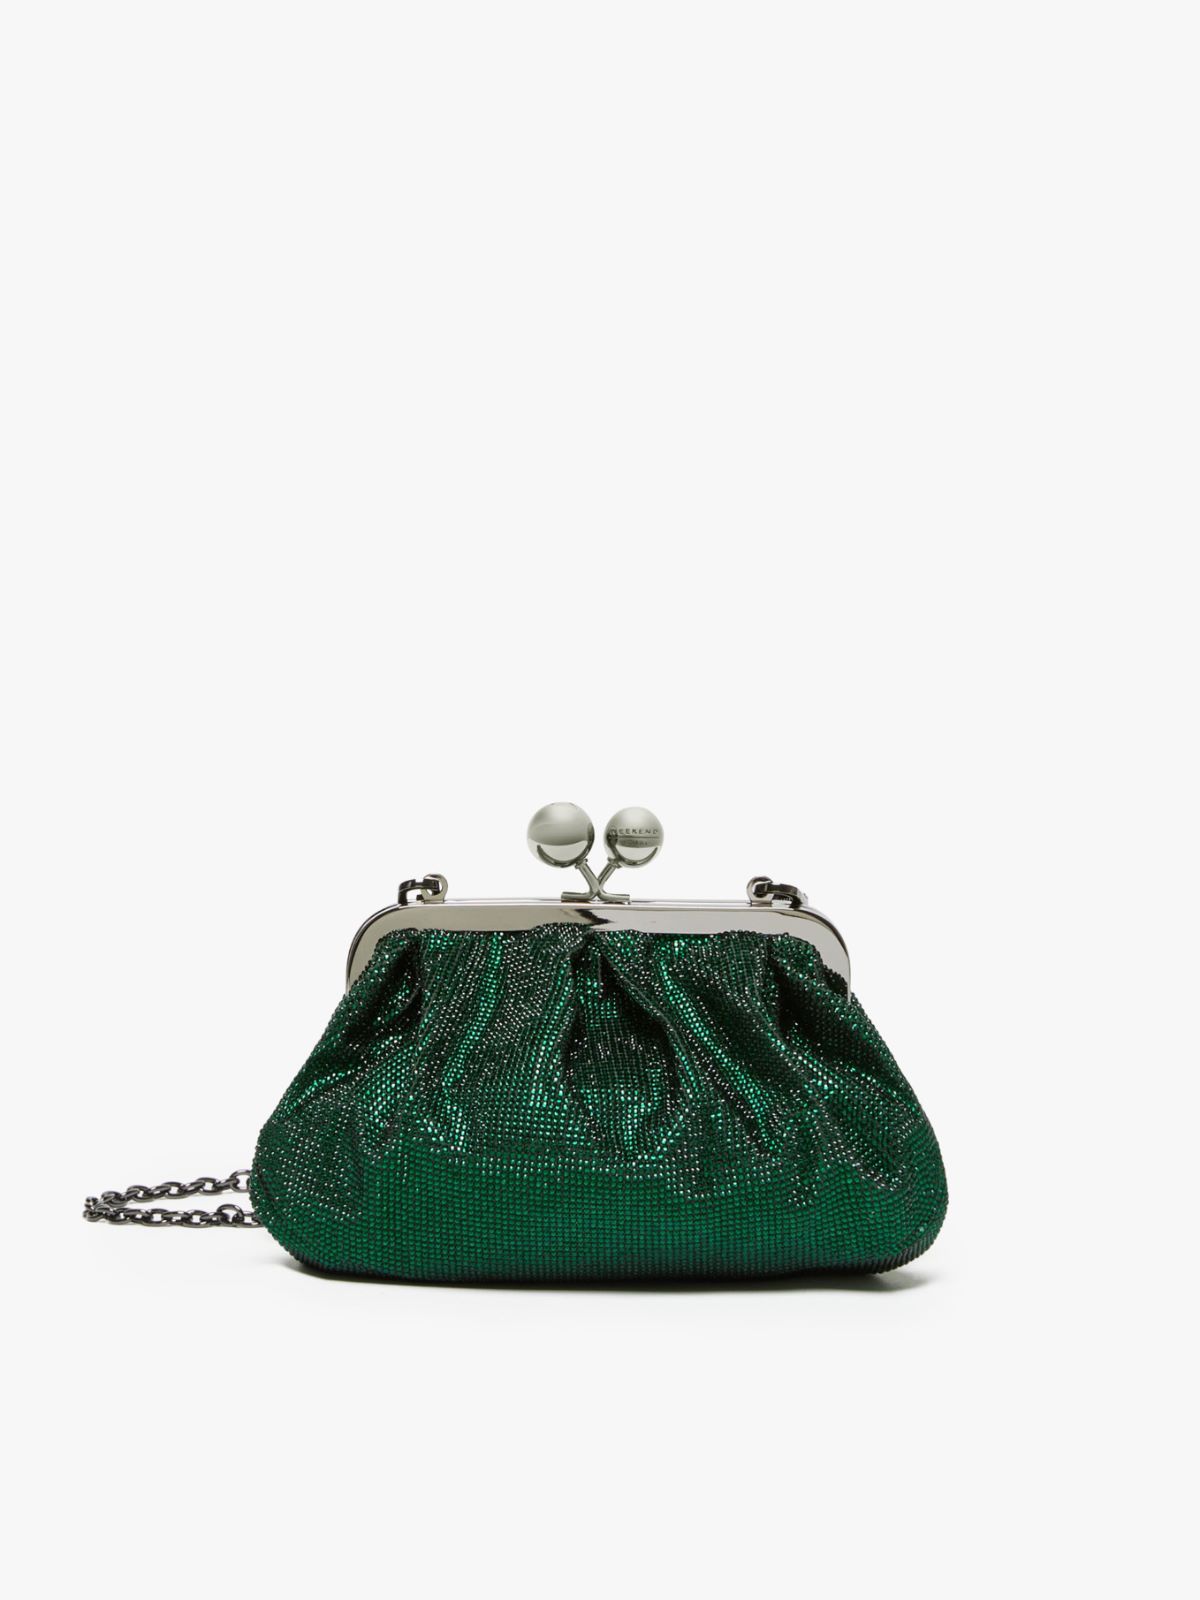 MAX MARA Beige Leather Margaux Top Zipped Handbag Purse Beautiful! | eBay